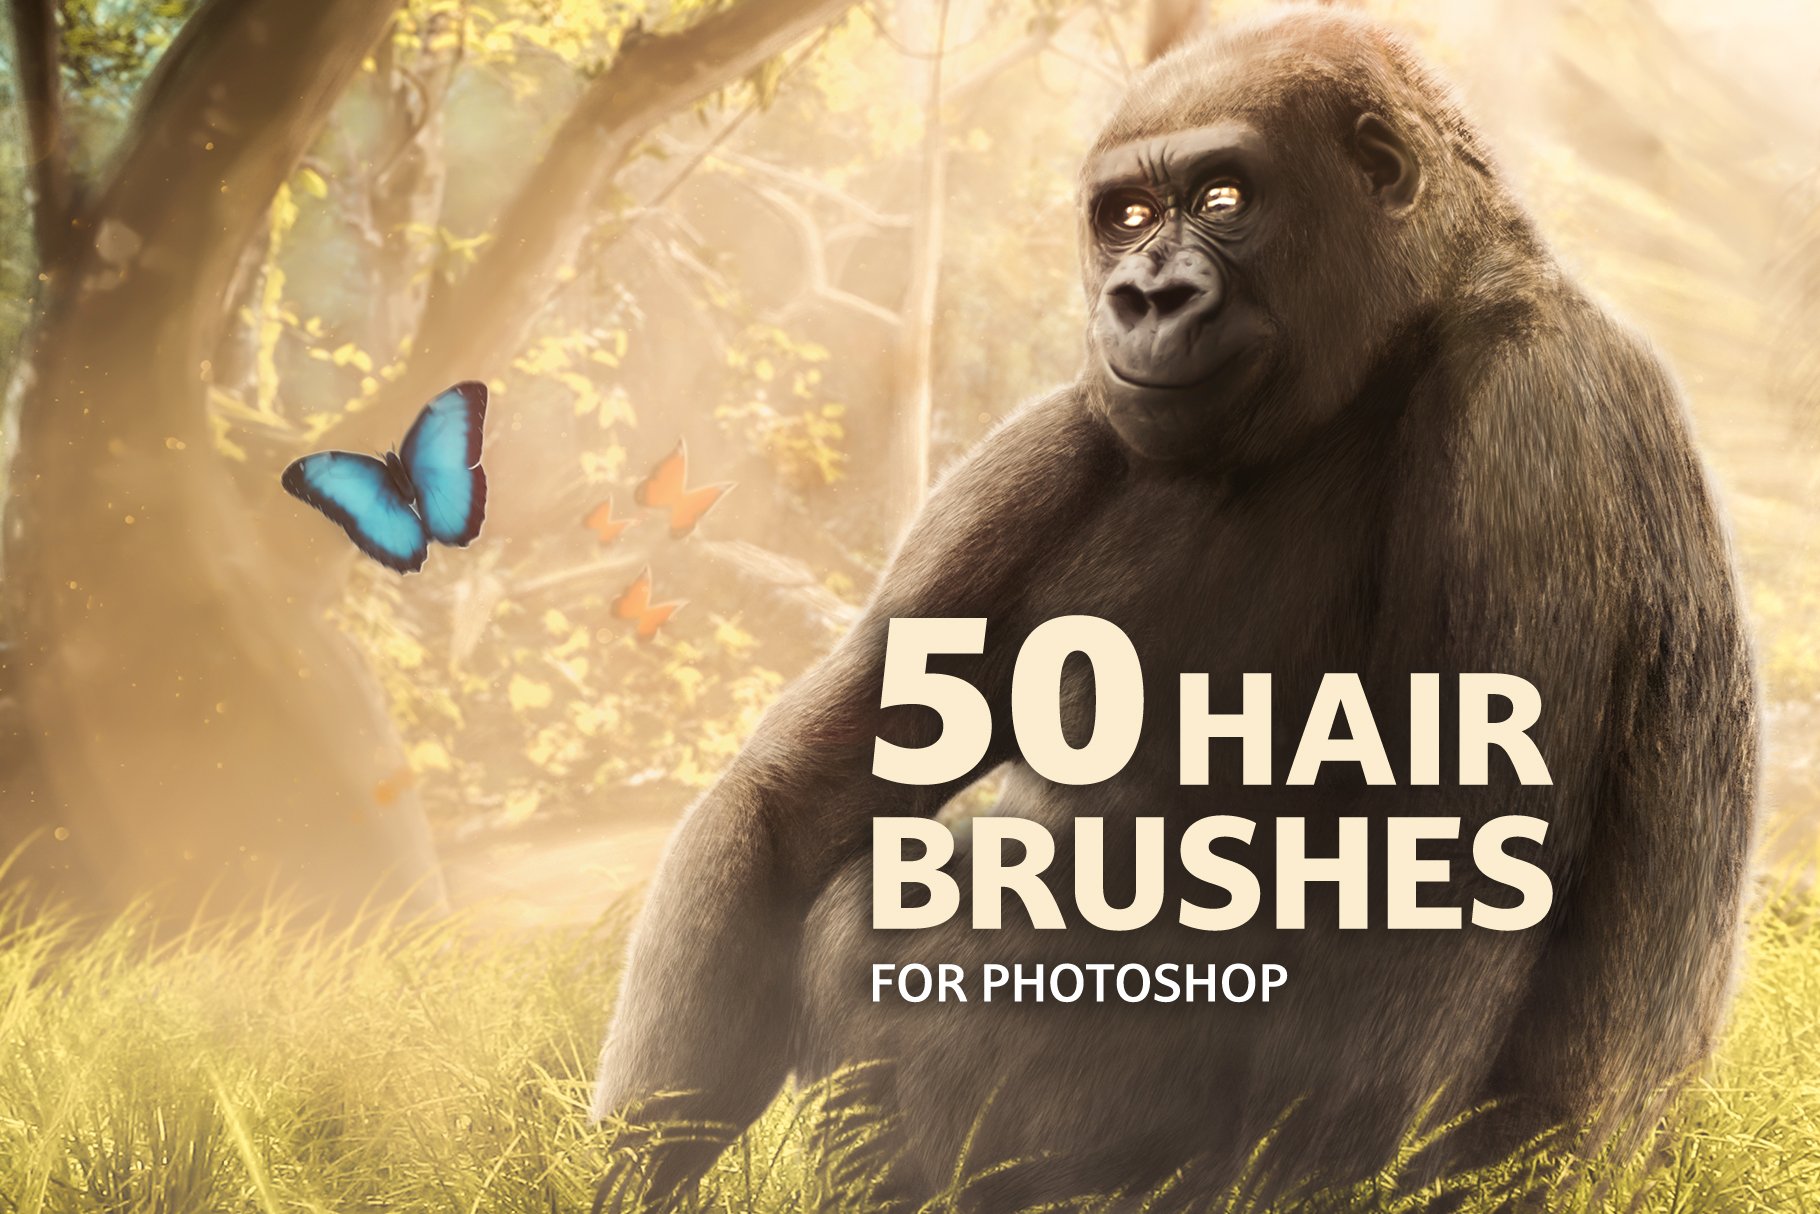 50 hair brushes for Photoshopcover image.